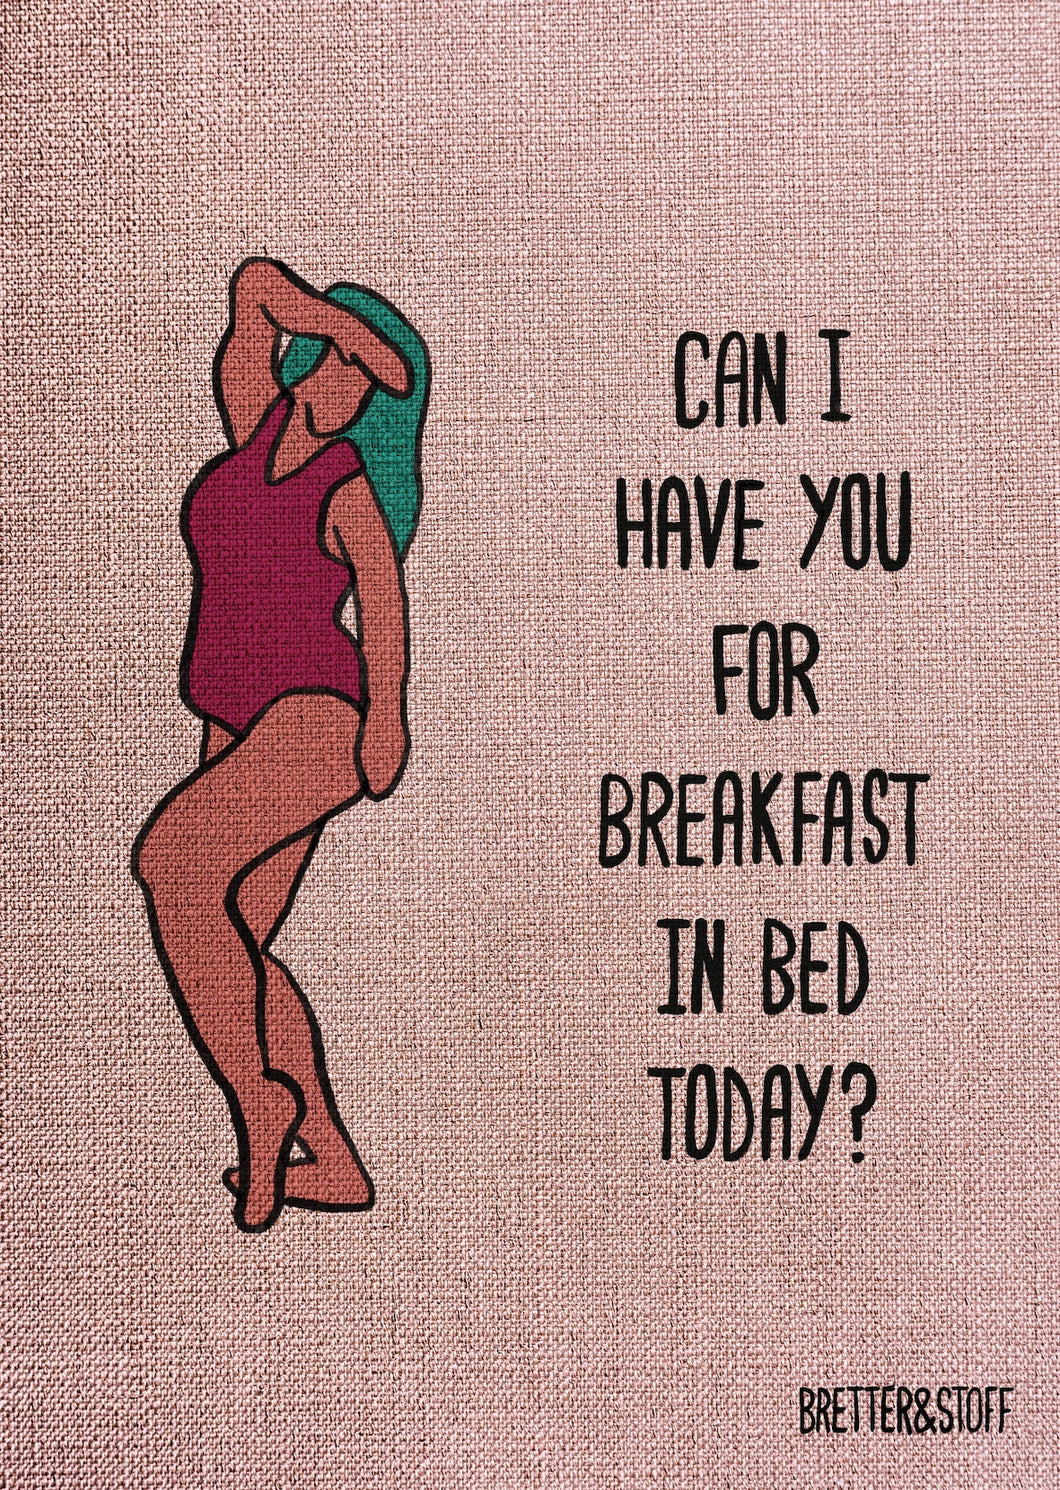 Print: Breakfast in bed